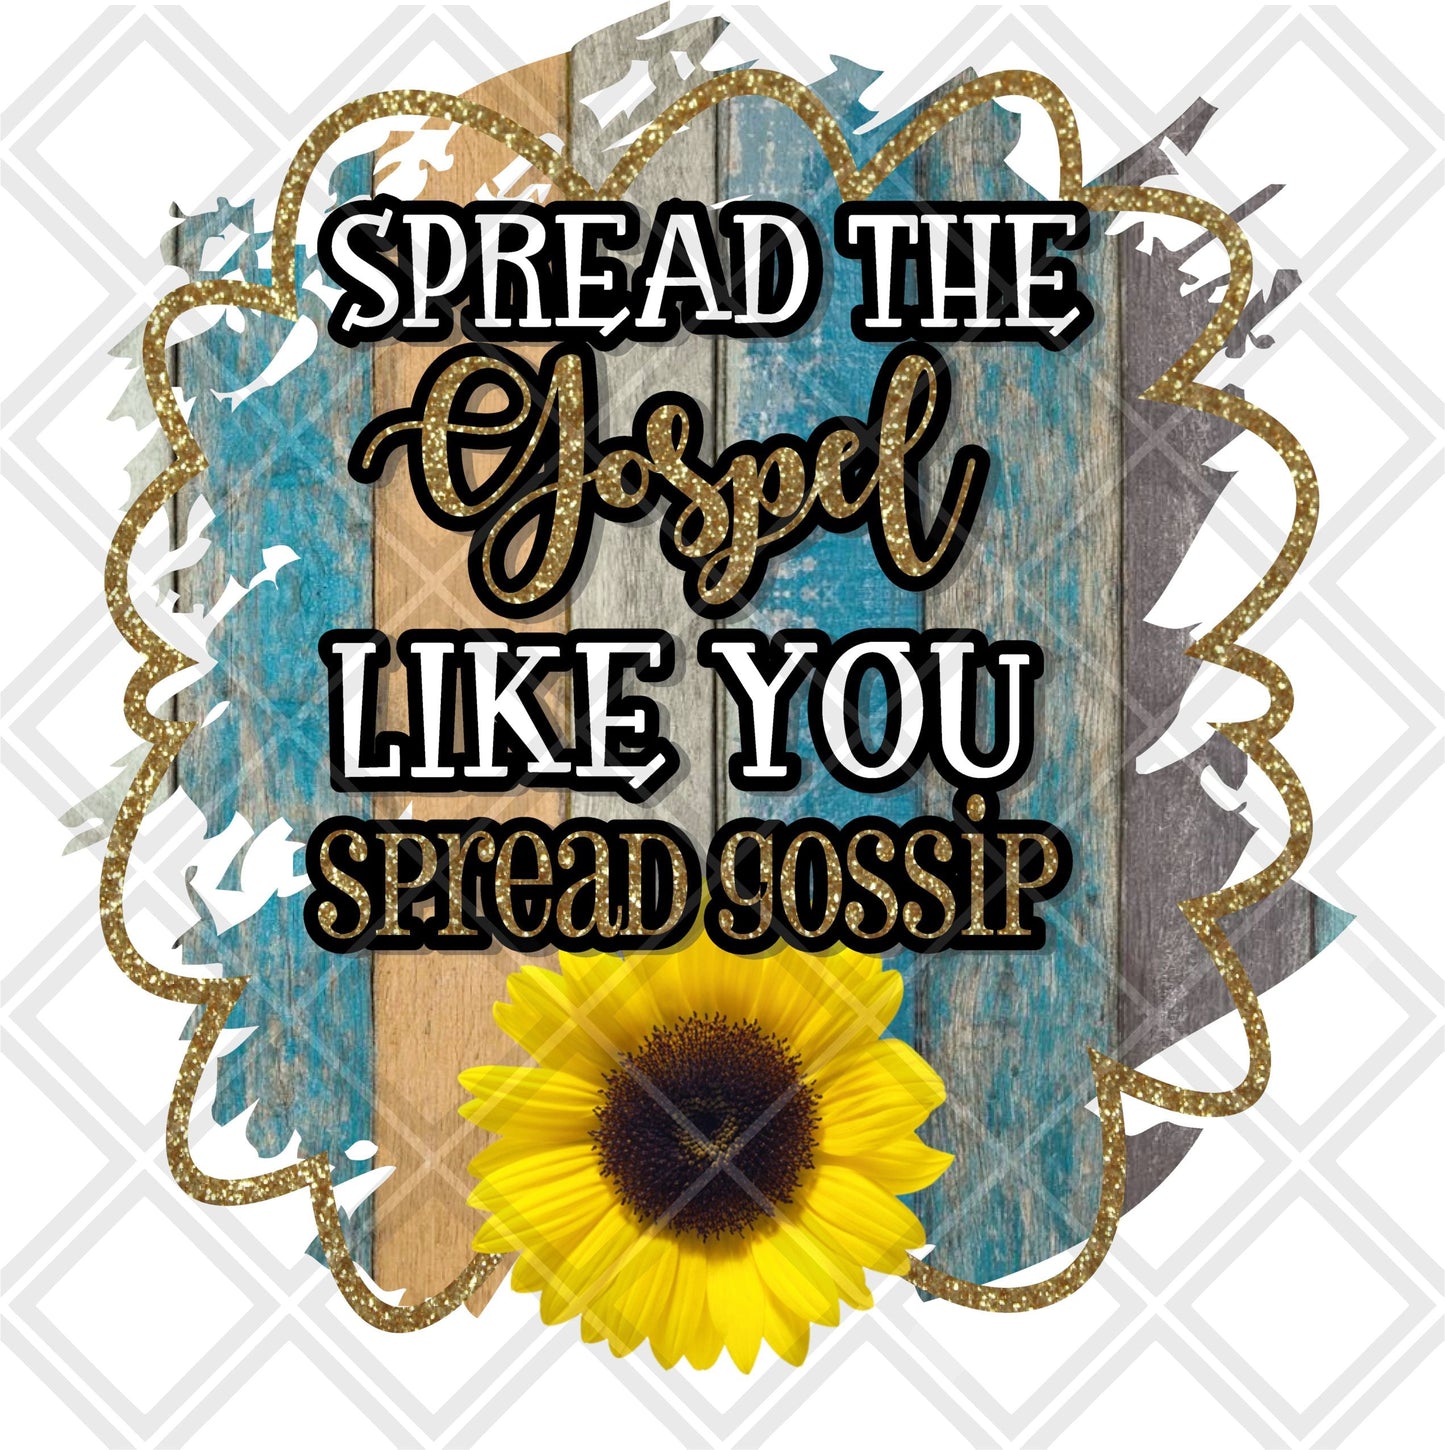 spread the gospel like you spread gossip DTF TRANSFERPRINT TO ORDER